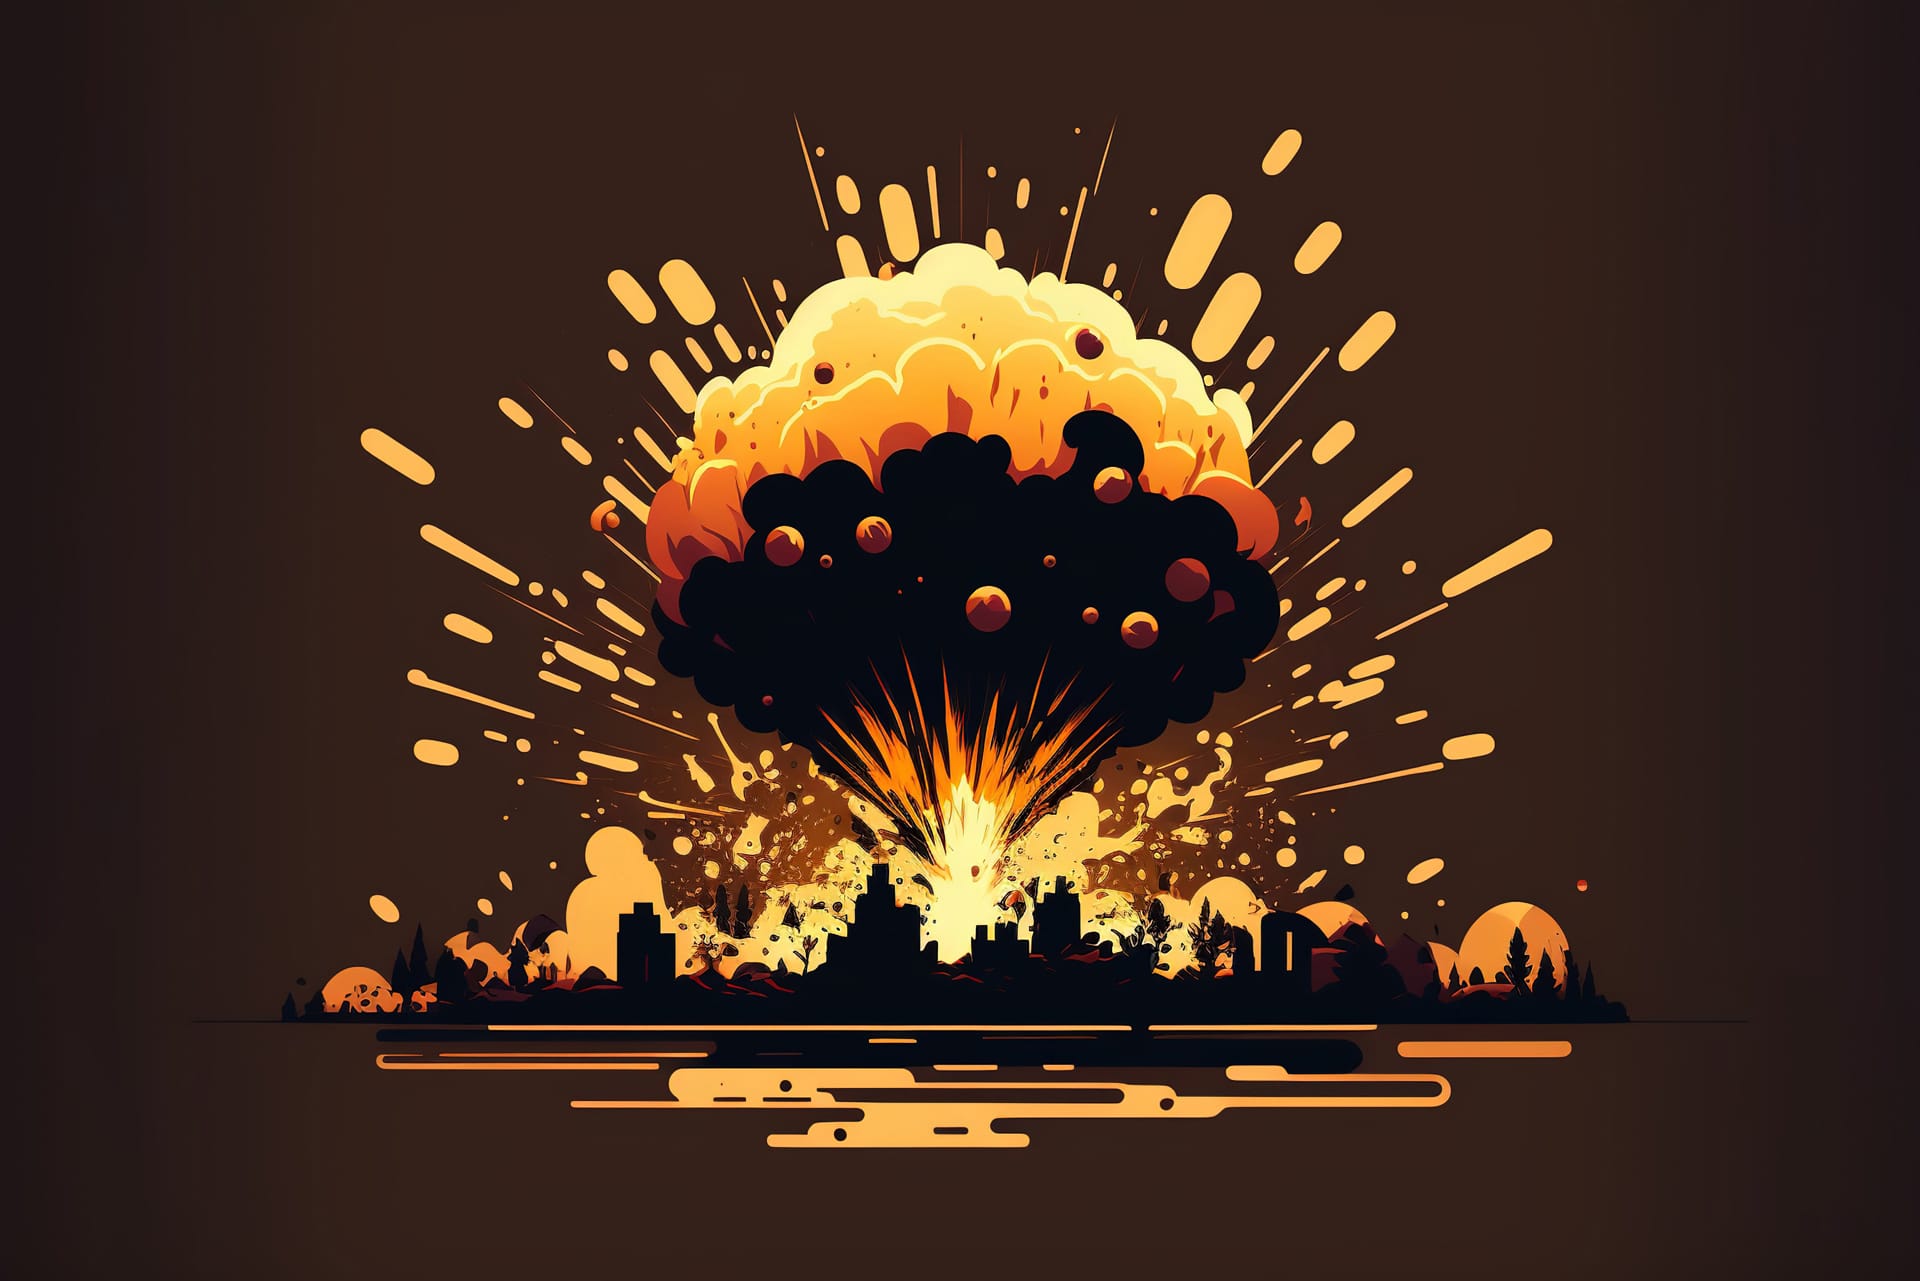 Massive explosion objects cartoon style